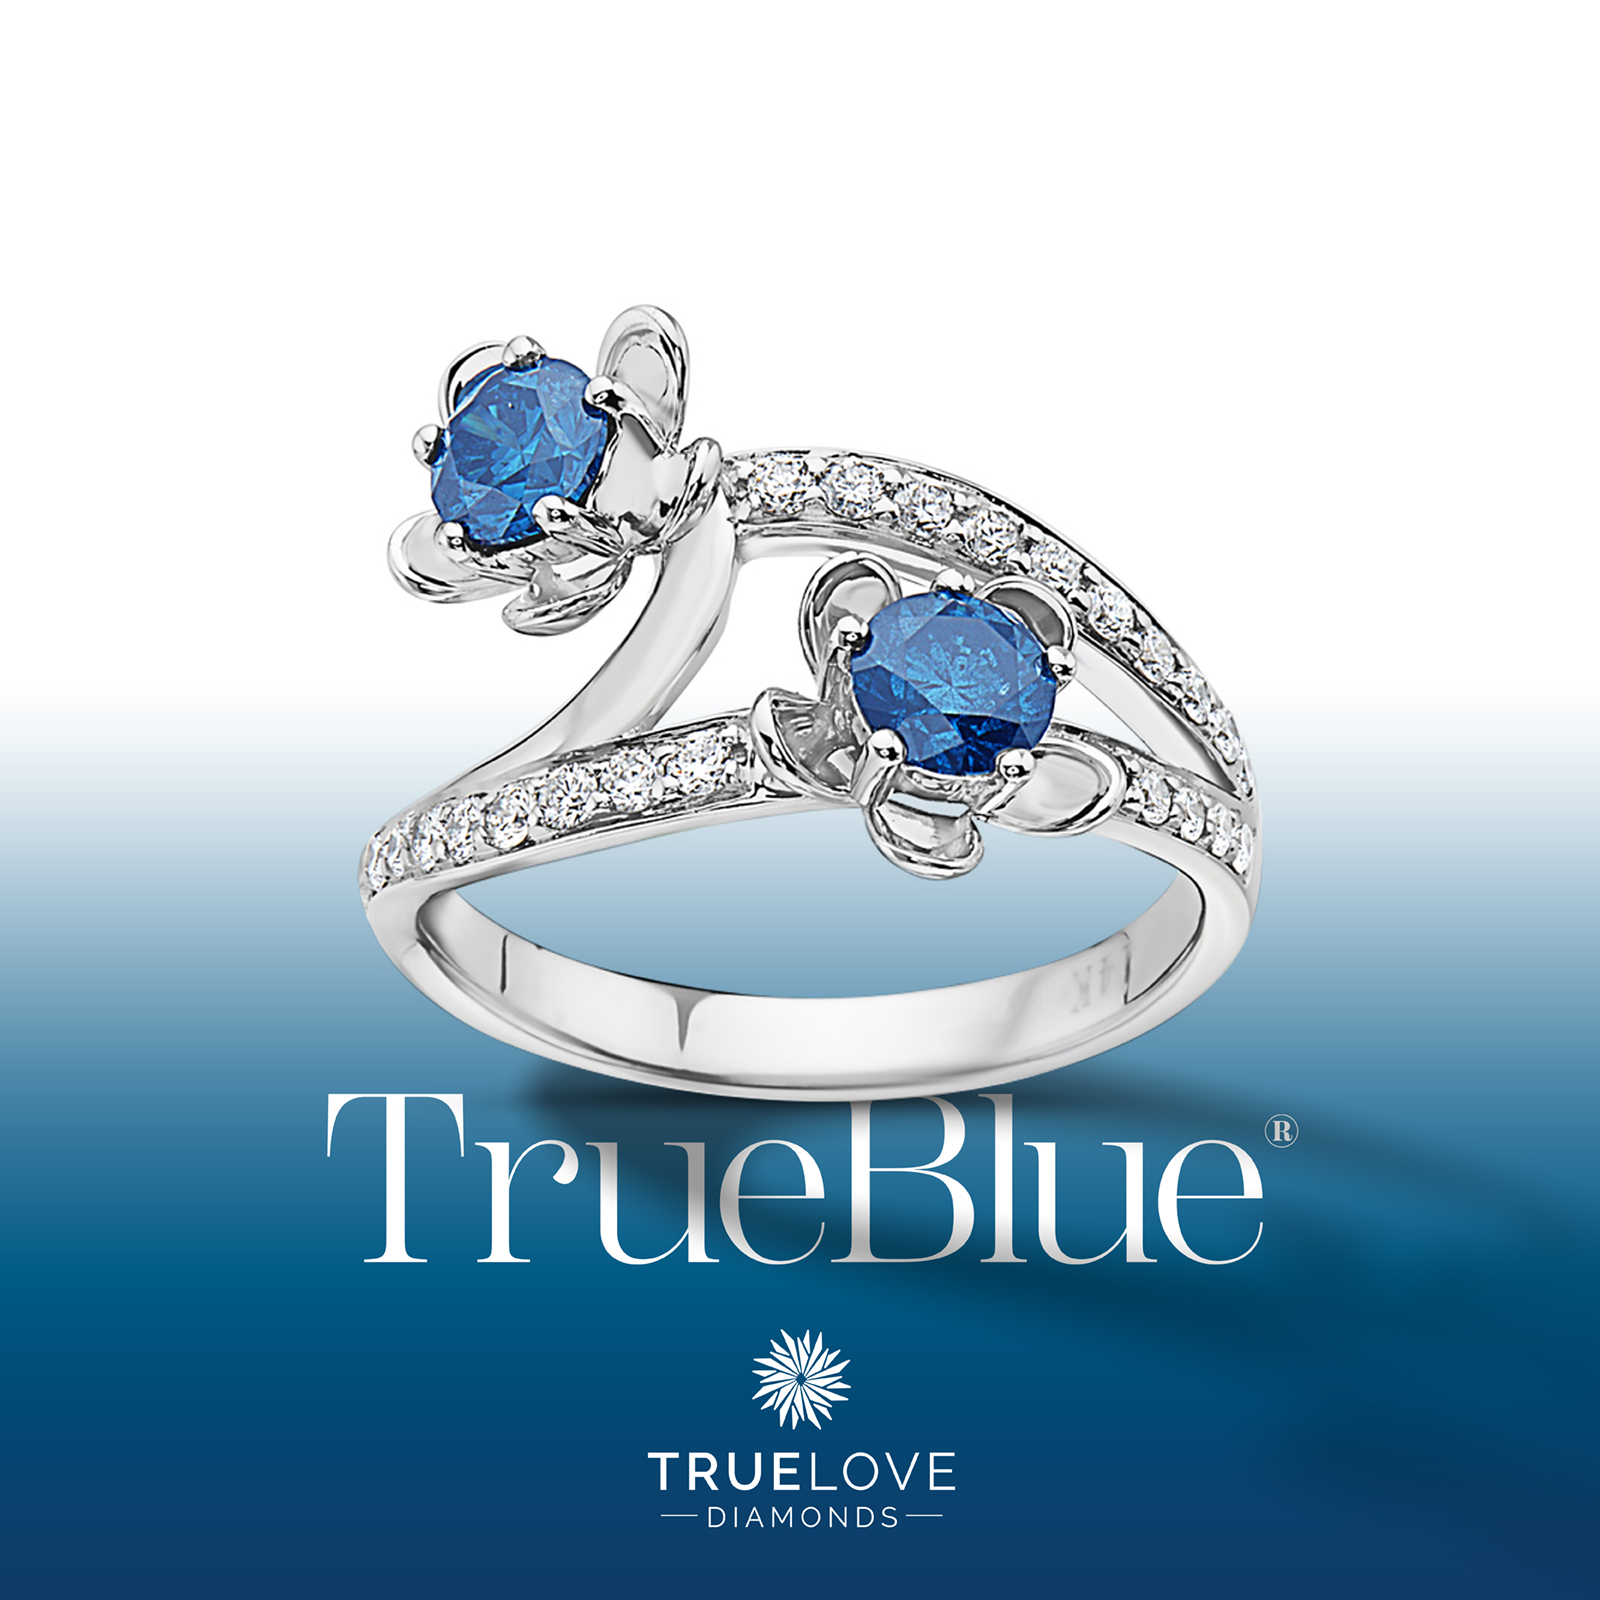 TrueBlue Diamonds